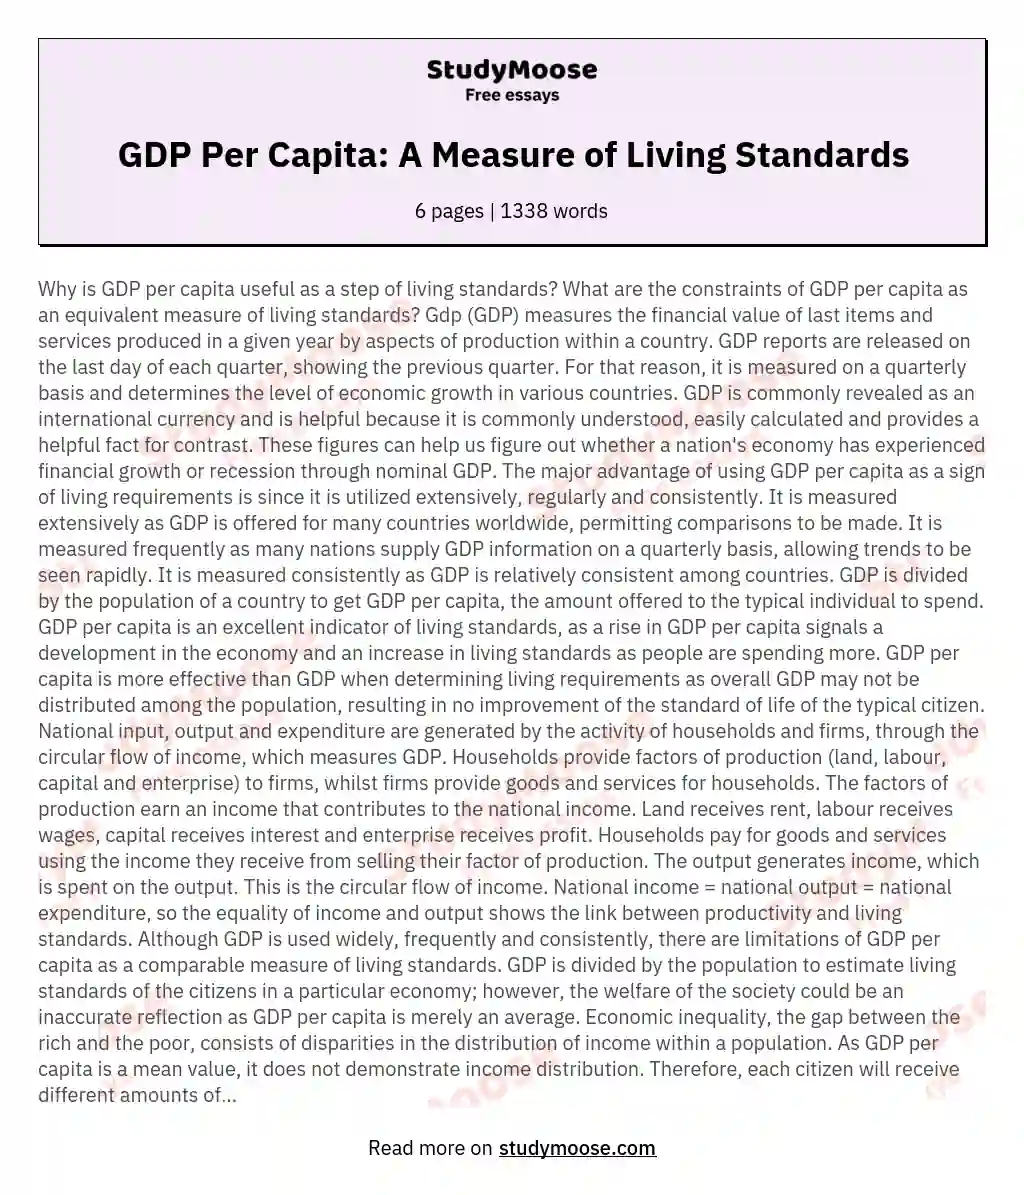 GDP Per Capita: A Measure of Living Standards essay